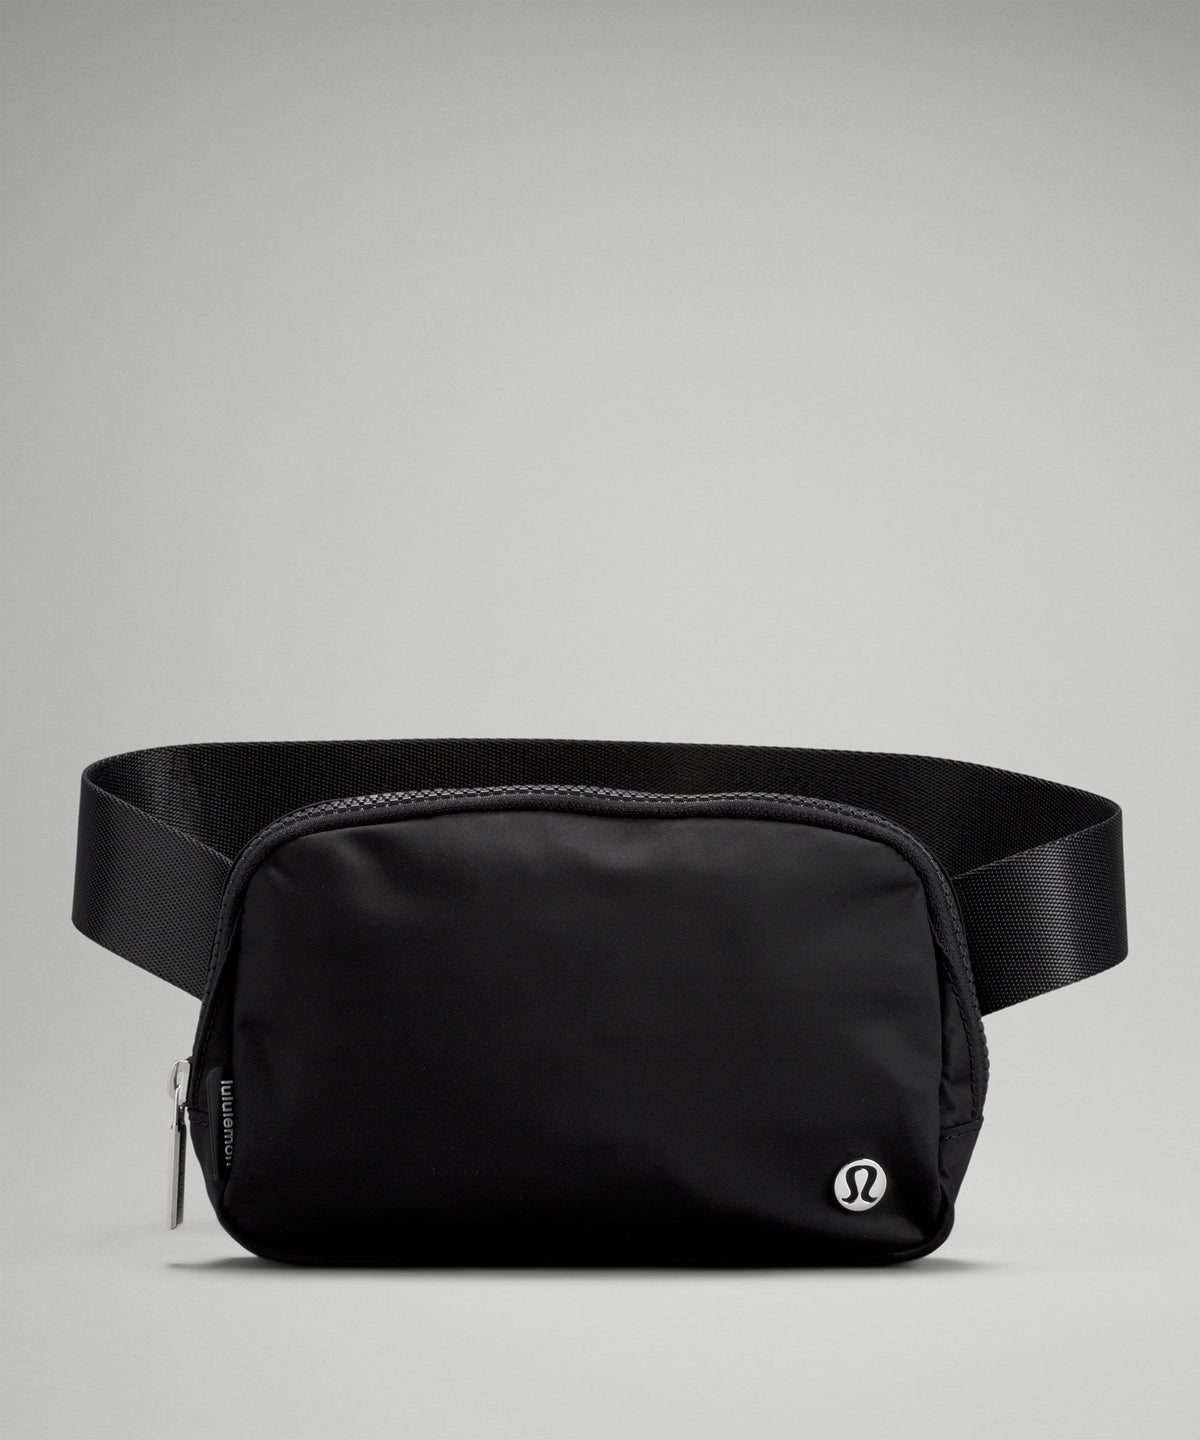 Lululemon Everywhere Belt Bag BUNDLE - Women's handbags